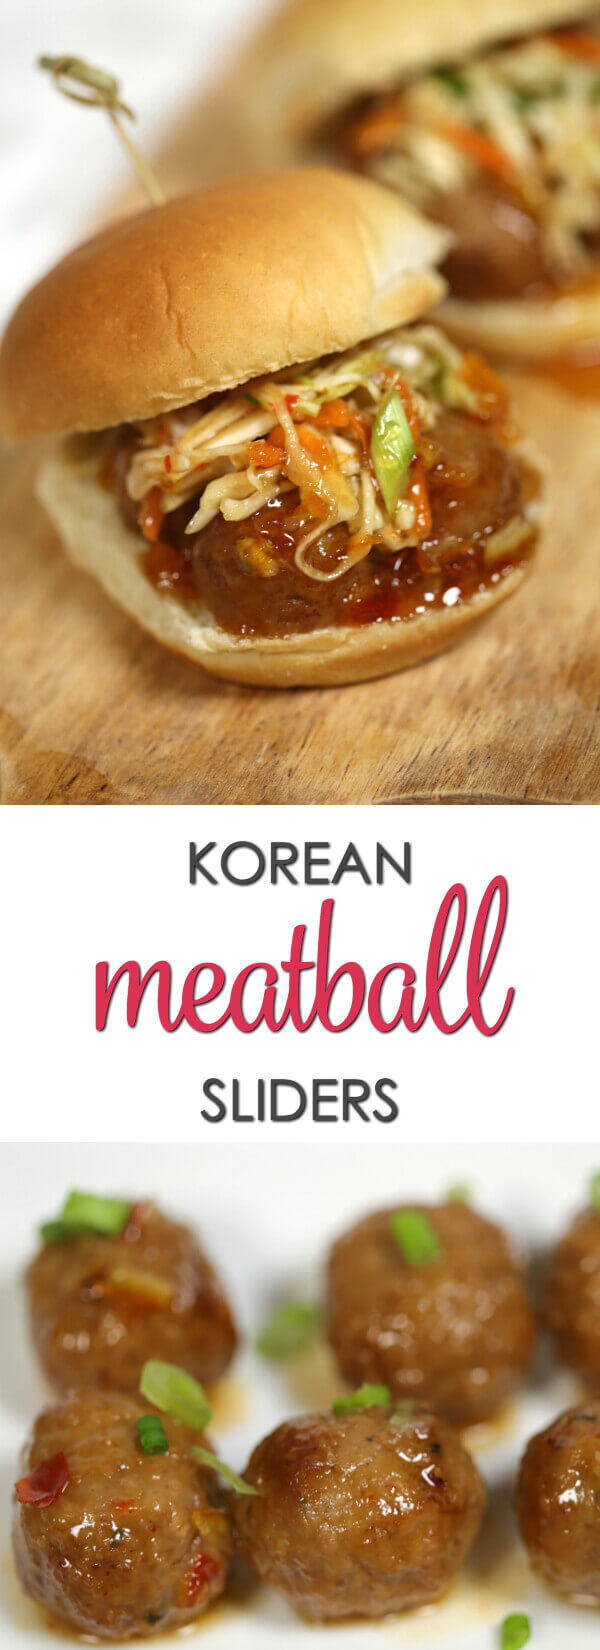 Korean Meatball Sliders and Korean Meatballs